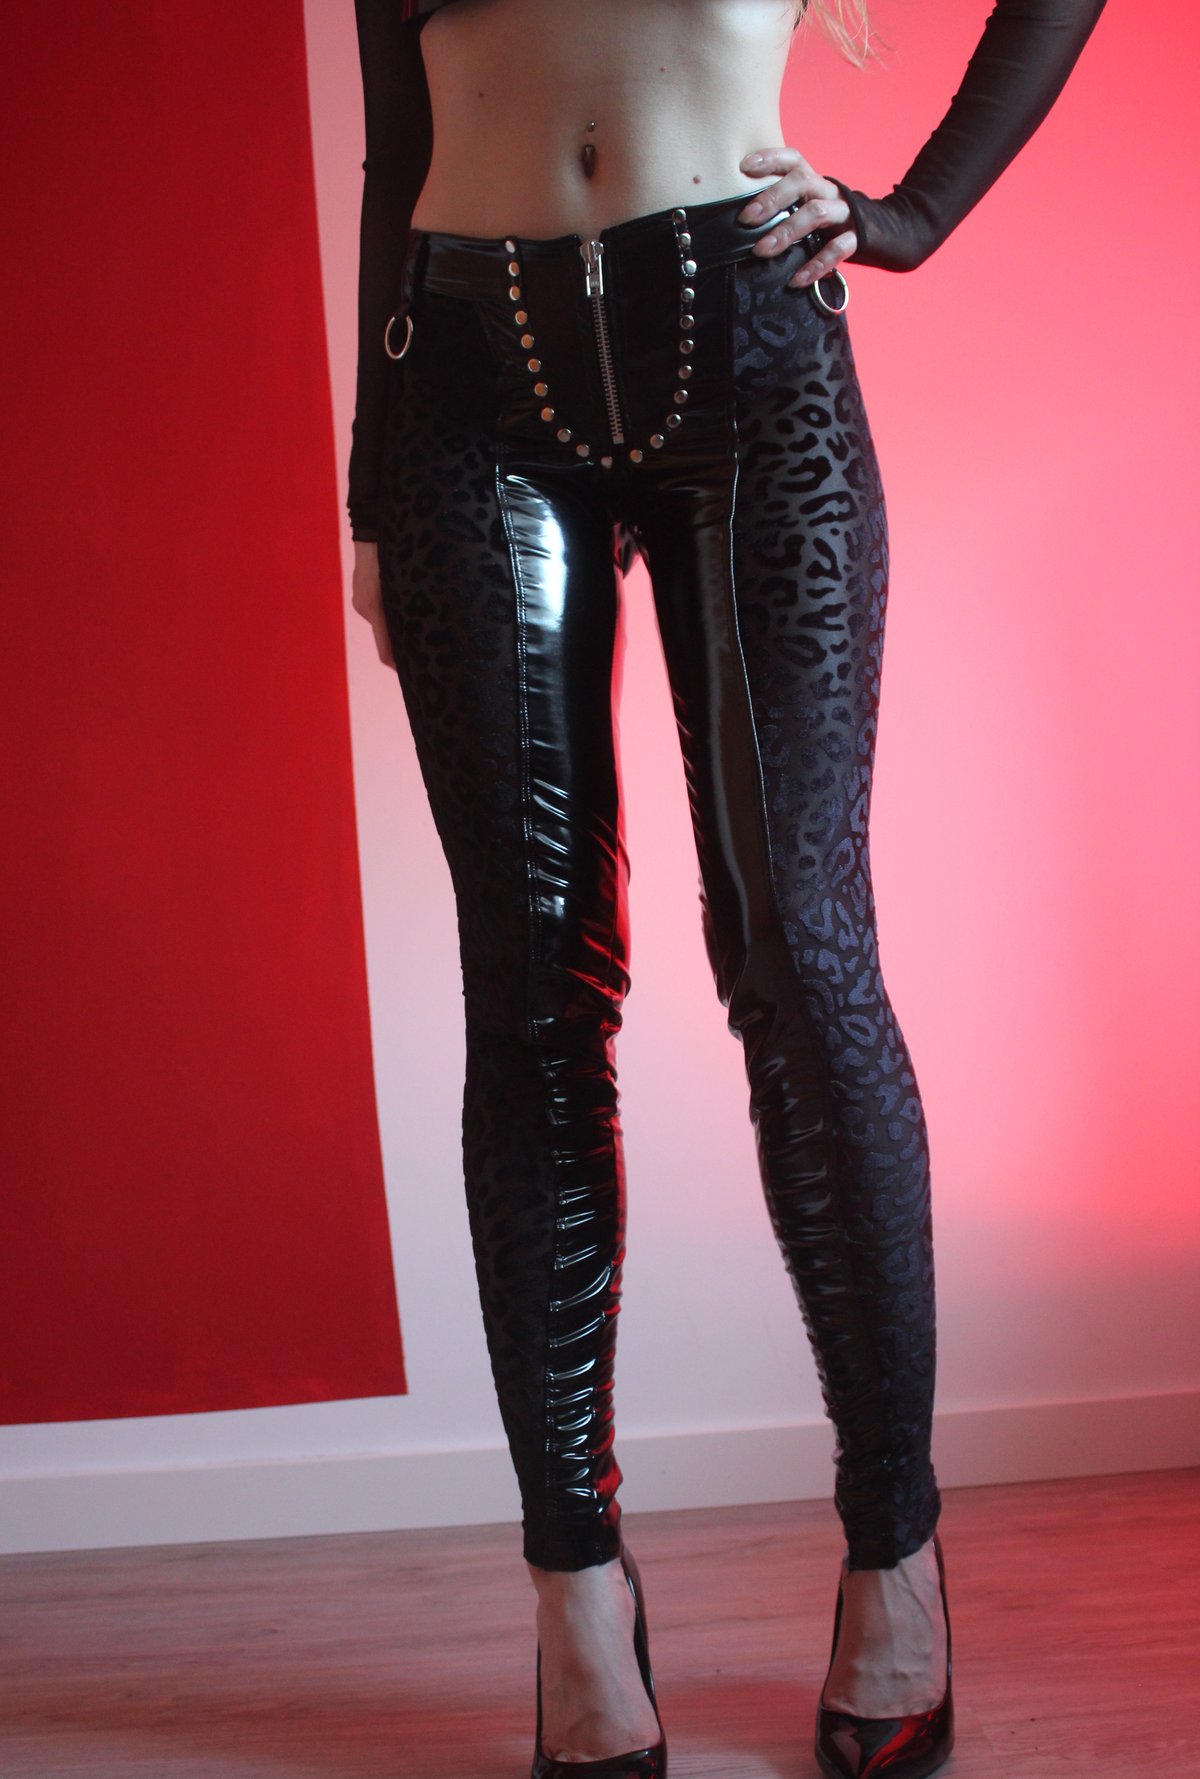 Image of Heavy Zipper Wildcat pants in black pvc and burnout velvet (Size XS/S)